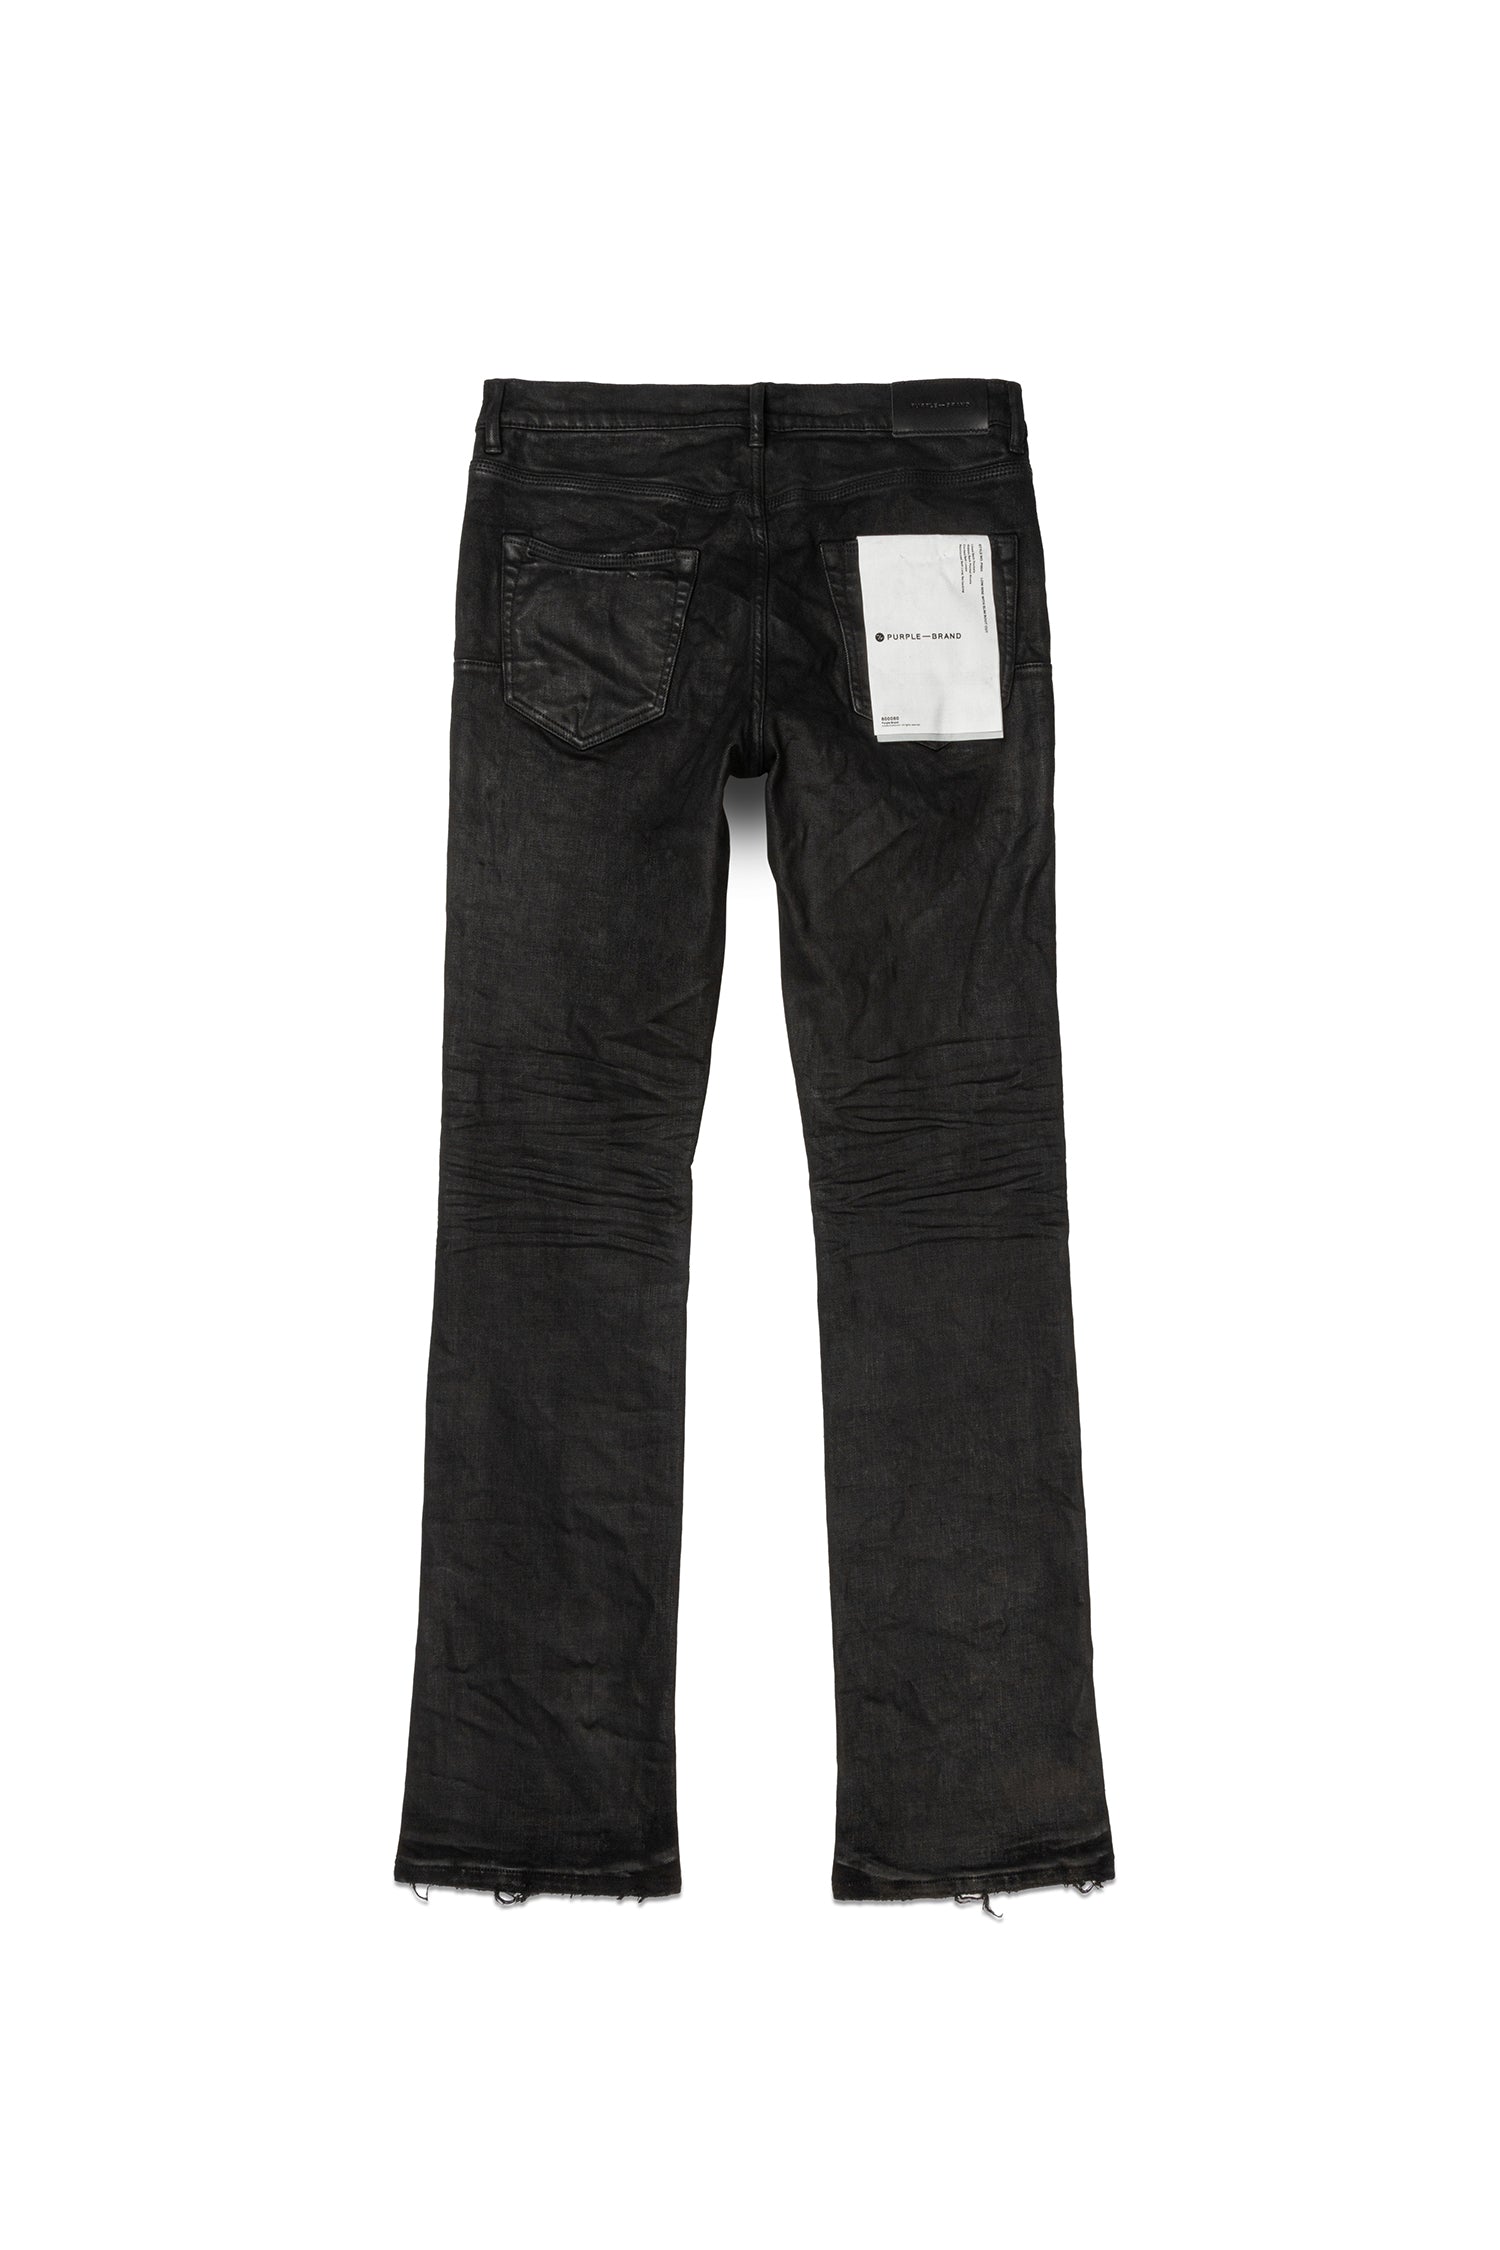 PURPLE BRAND Jeans straight fit in dcdb flare black